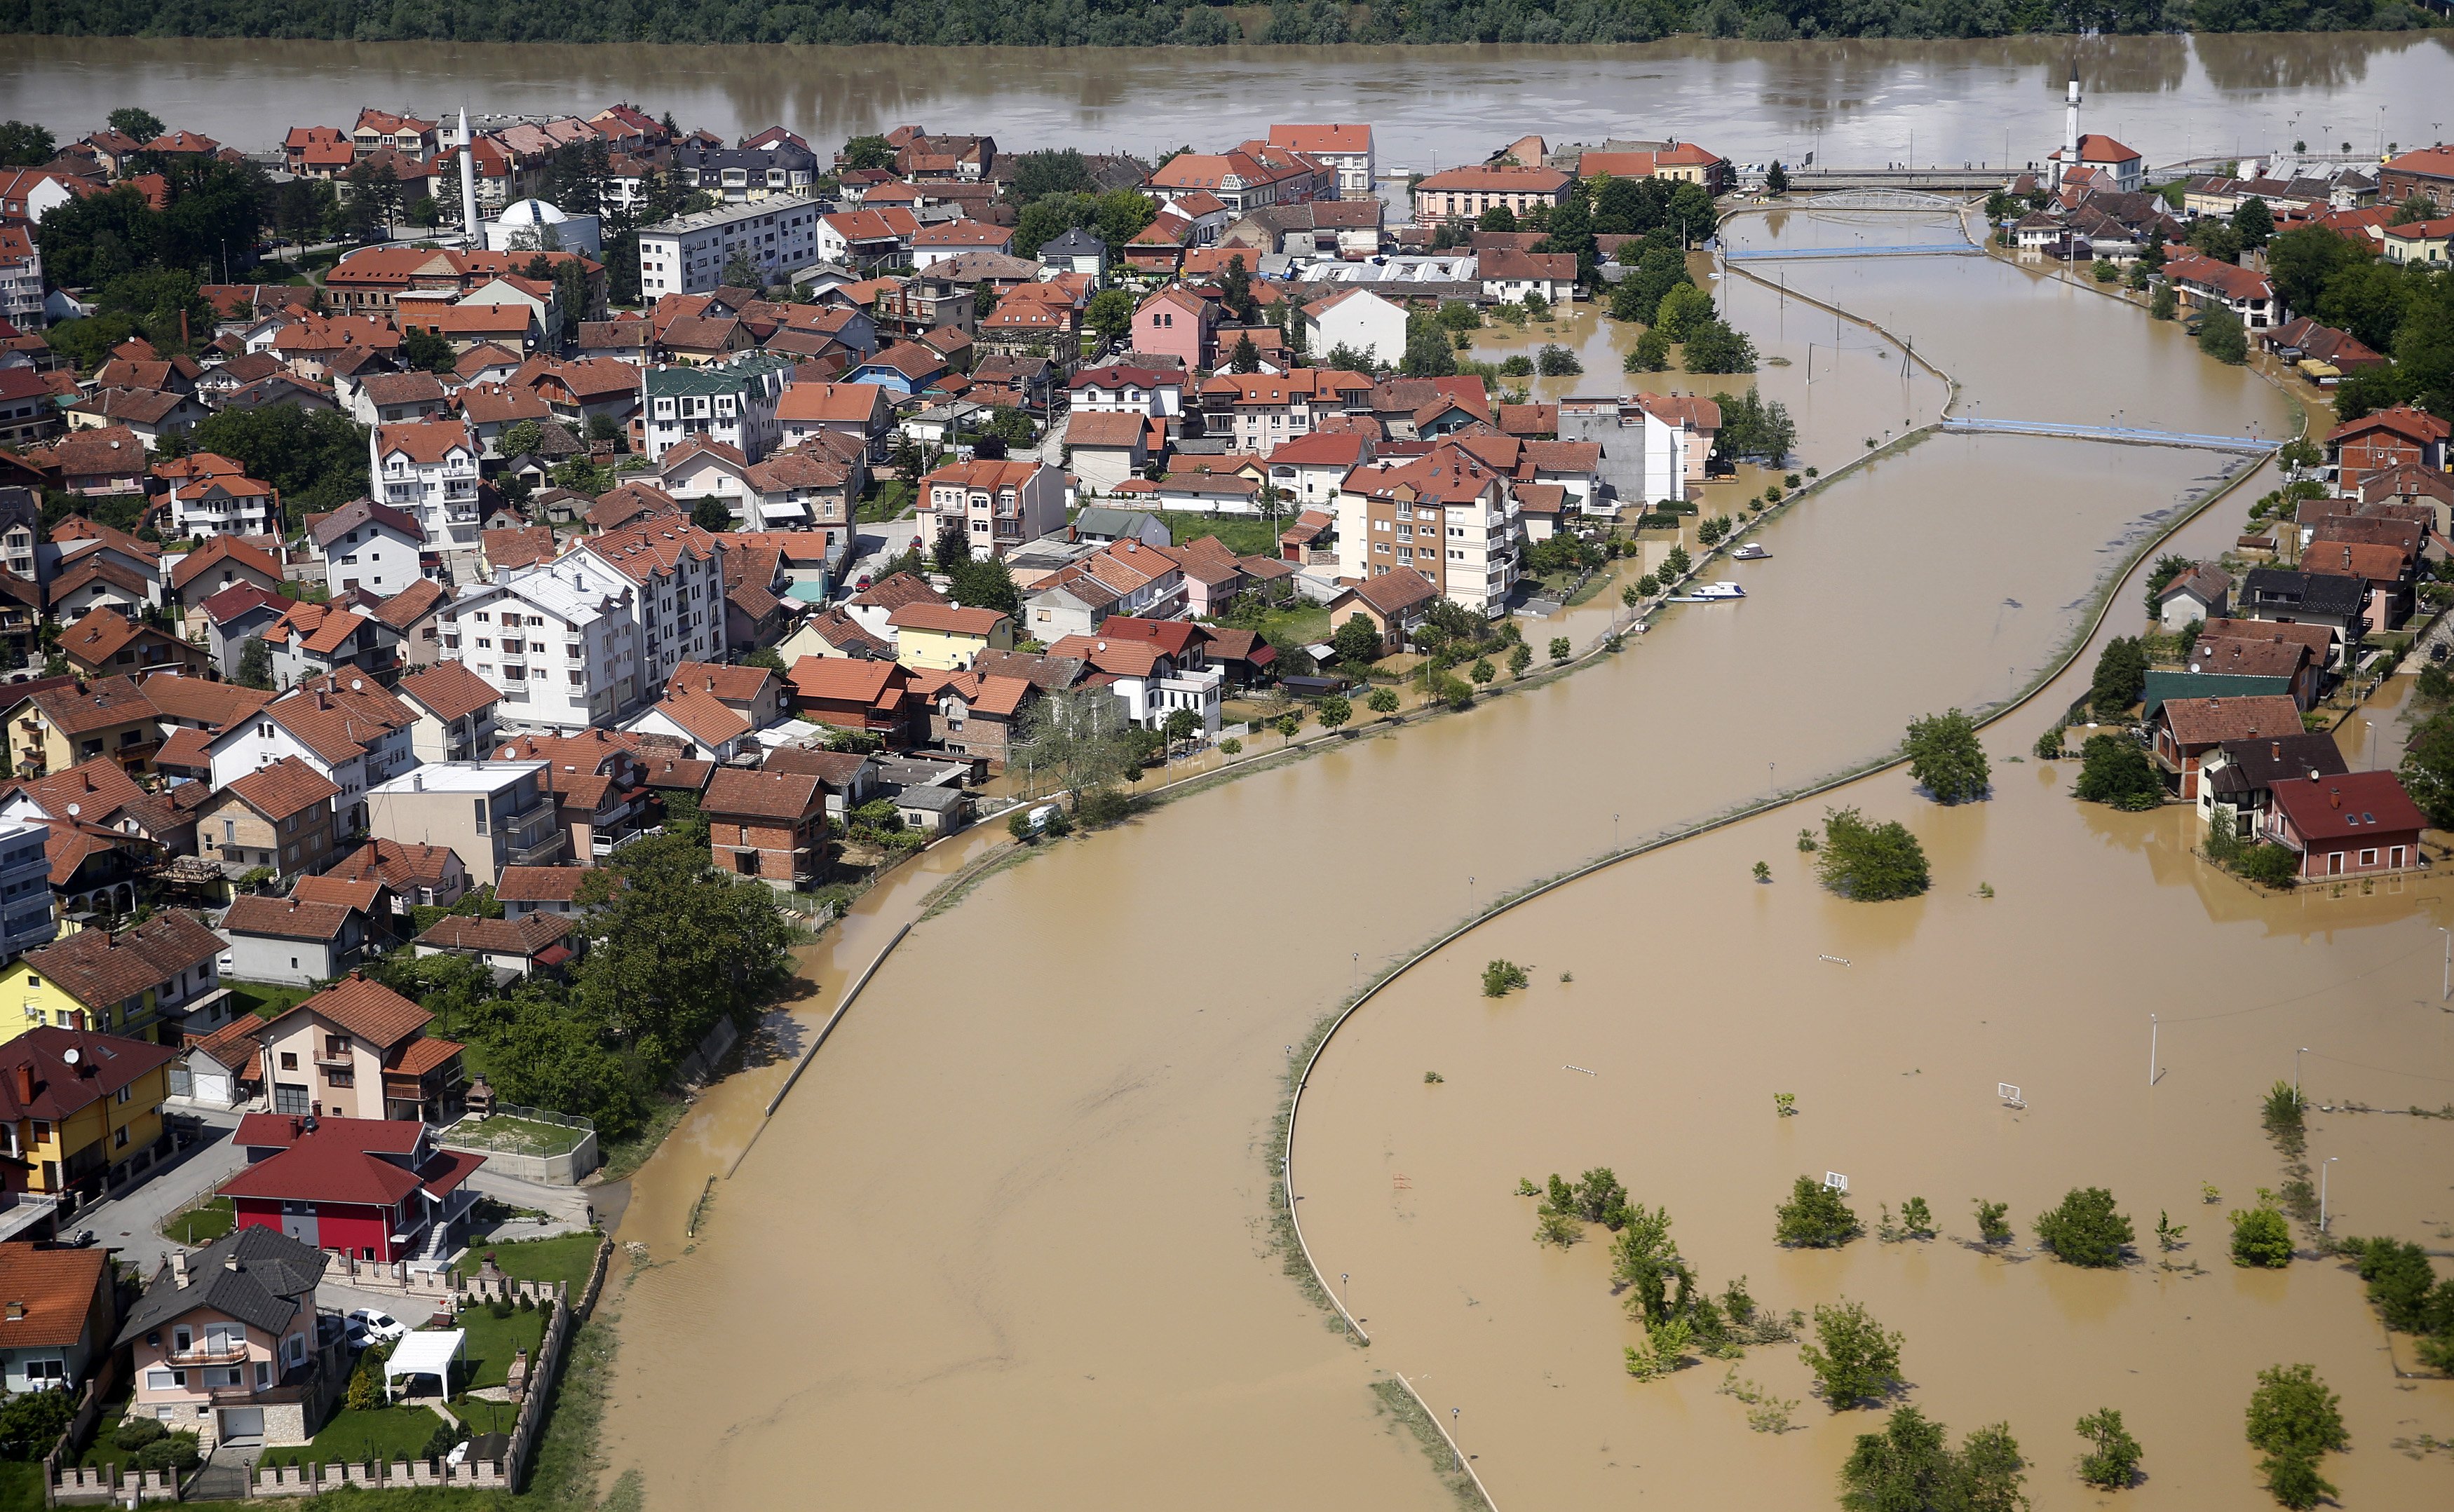  Brcko (Bosnia Herzegovina) Mayo 2014. REUTERS/Marko Djurica